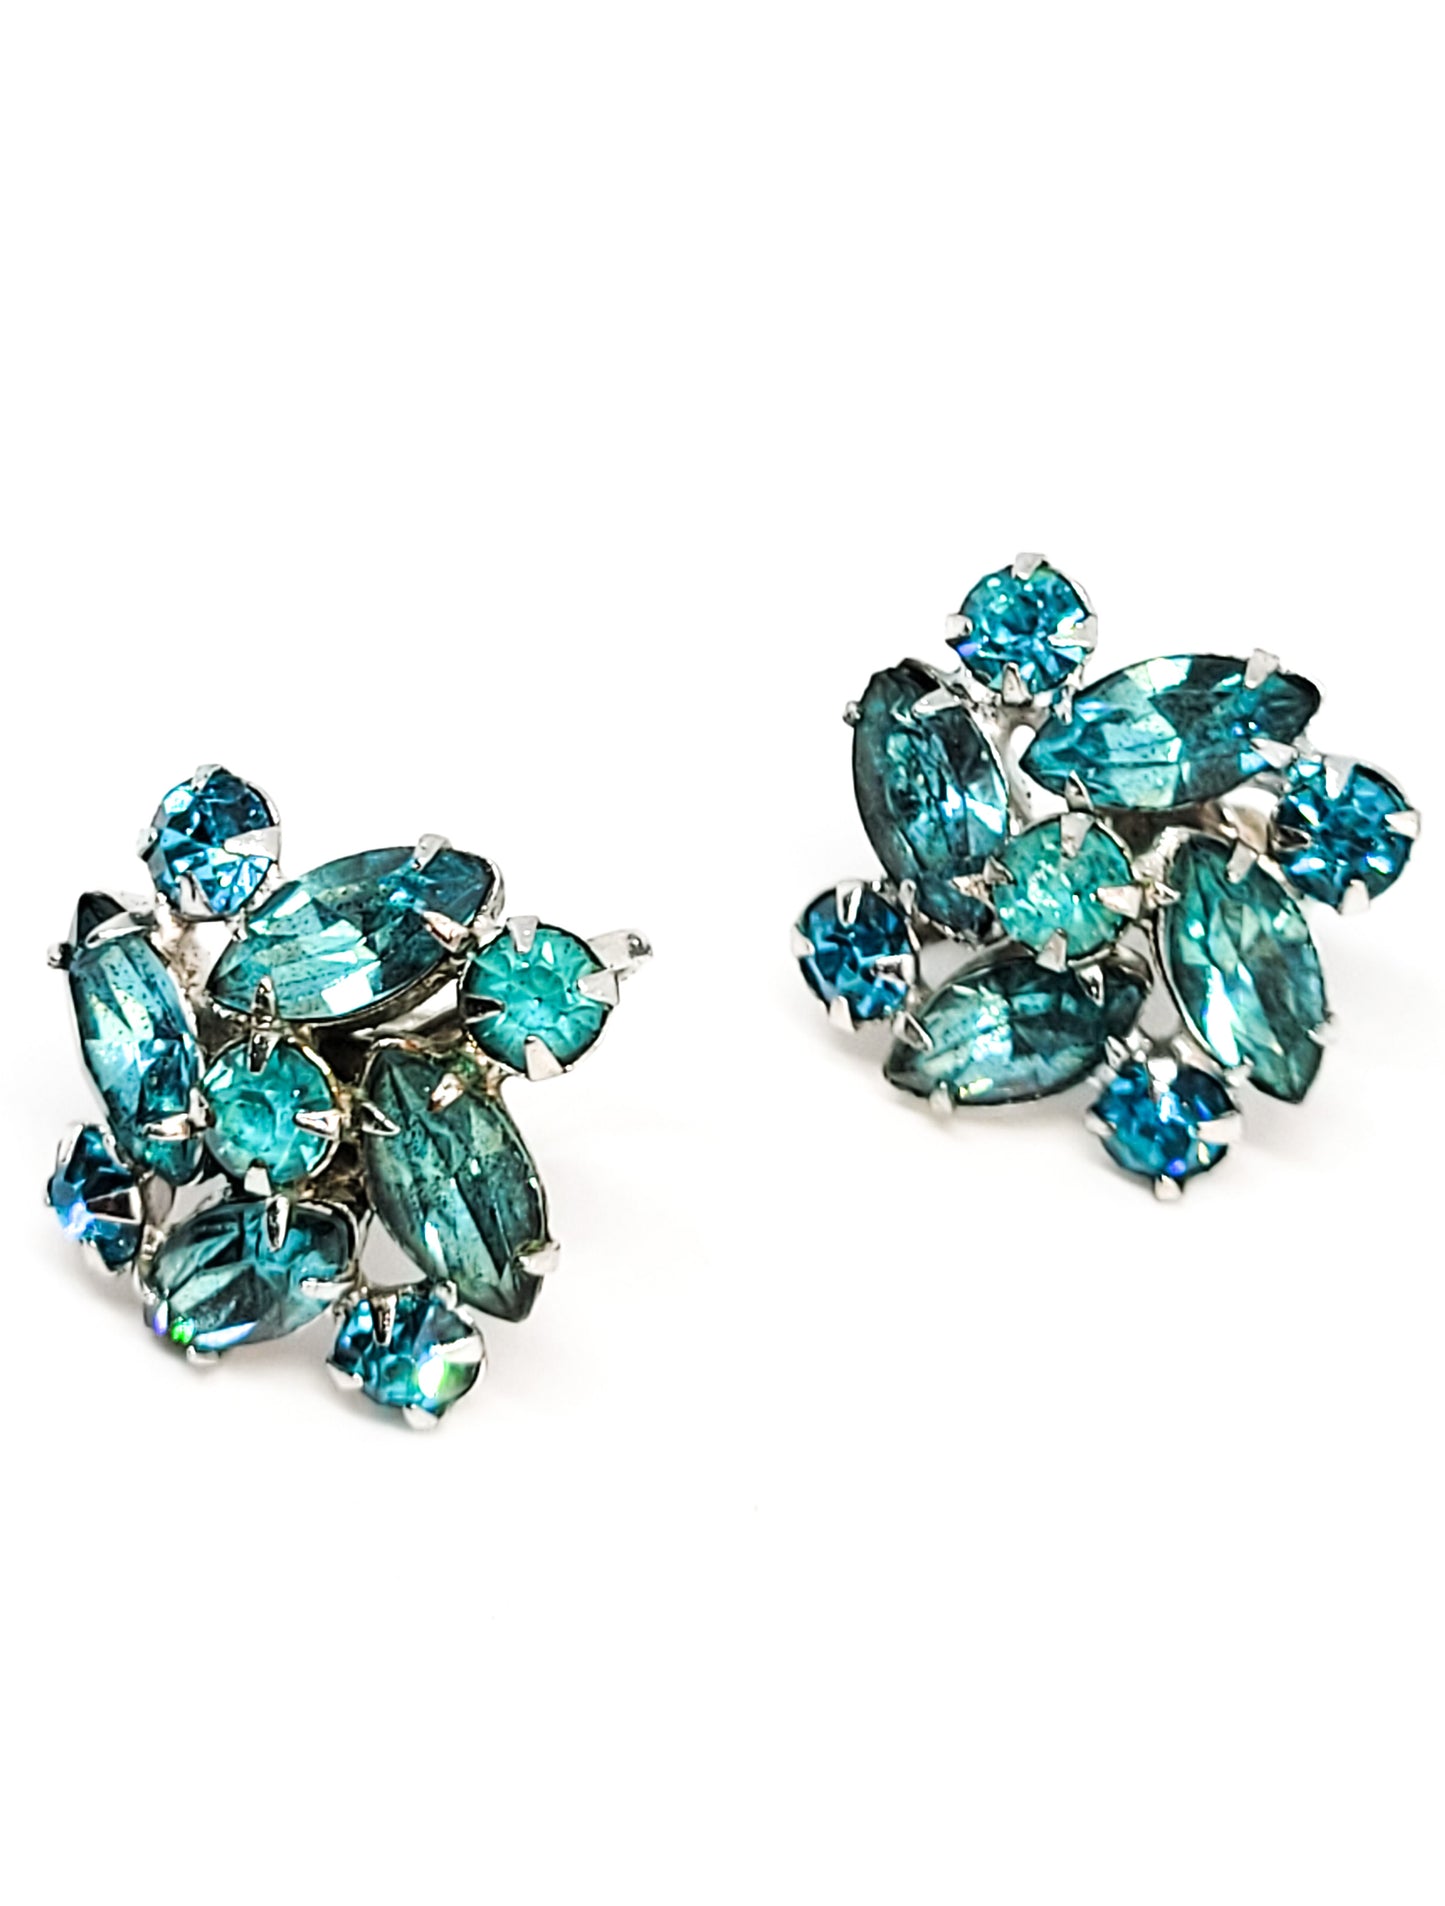 Aqua blue navette rhinestone atomic spiral vintage screw back earrings